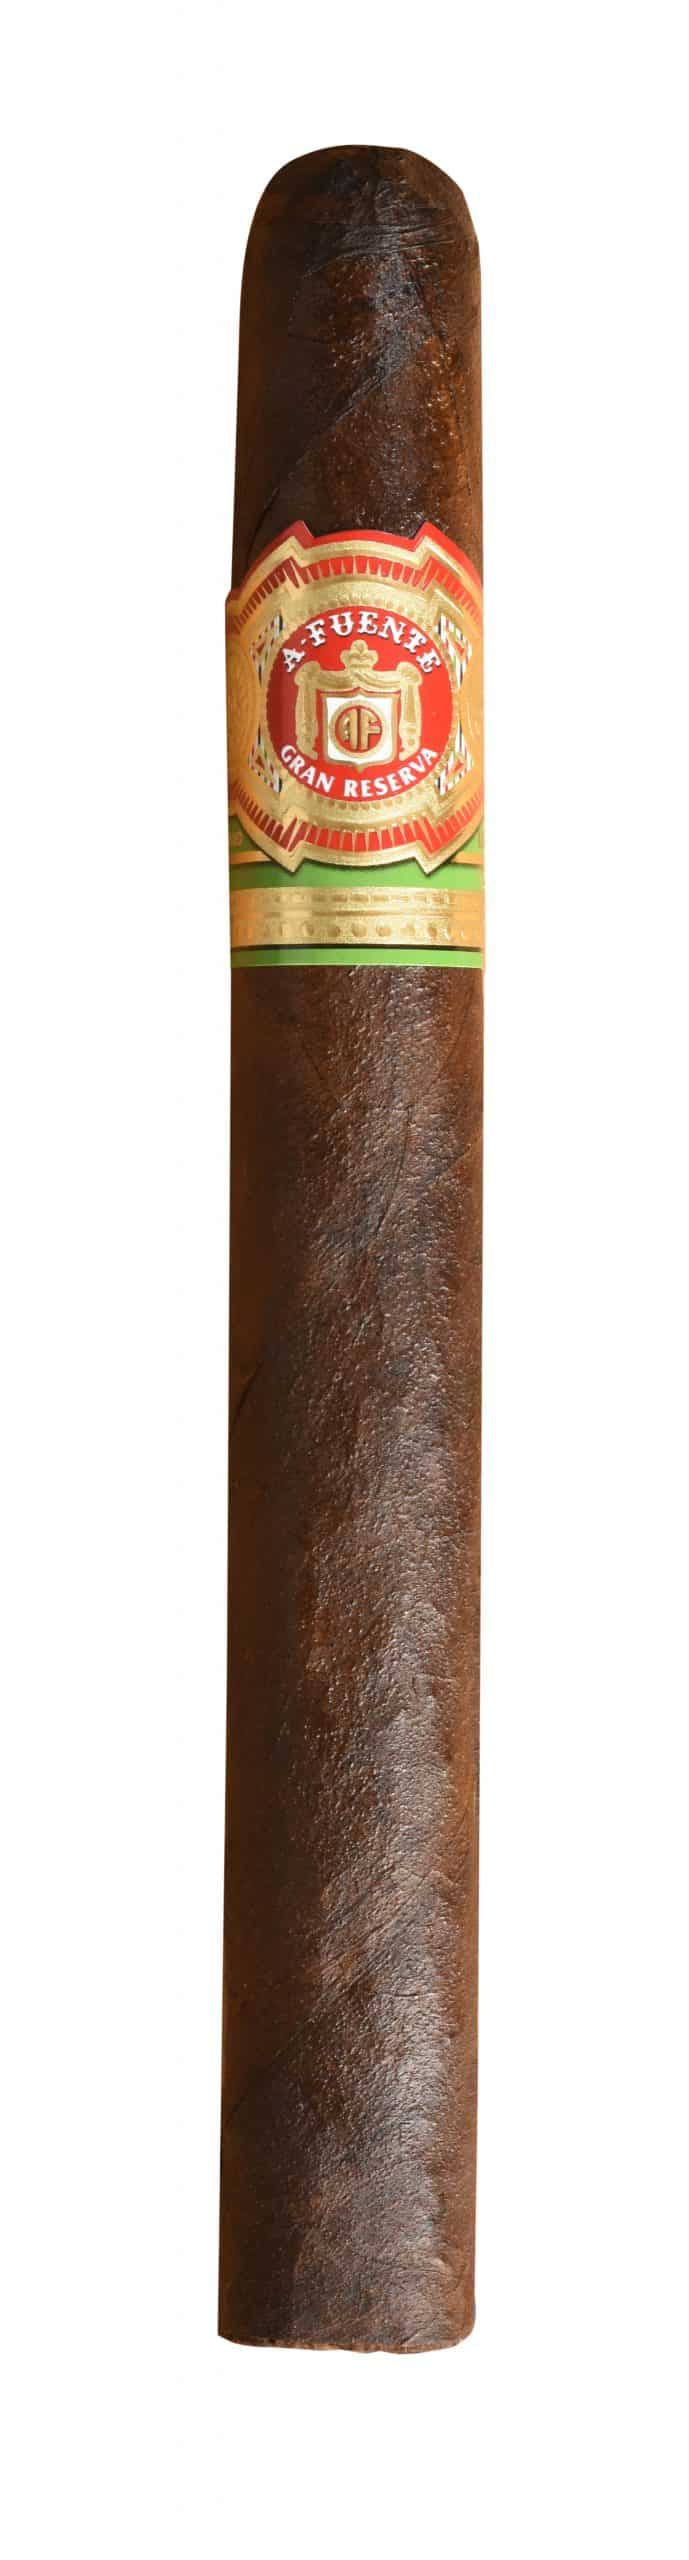 single arturo fuente corona imperial maduro cigar